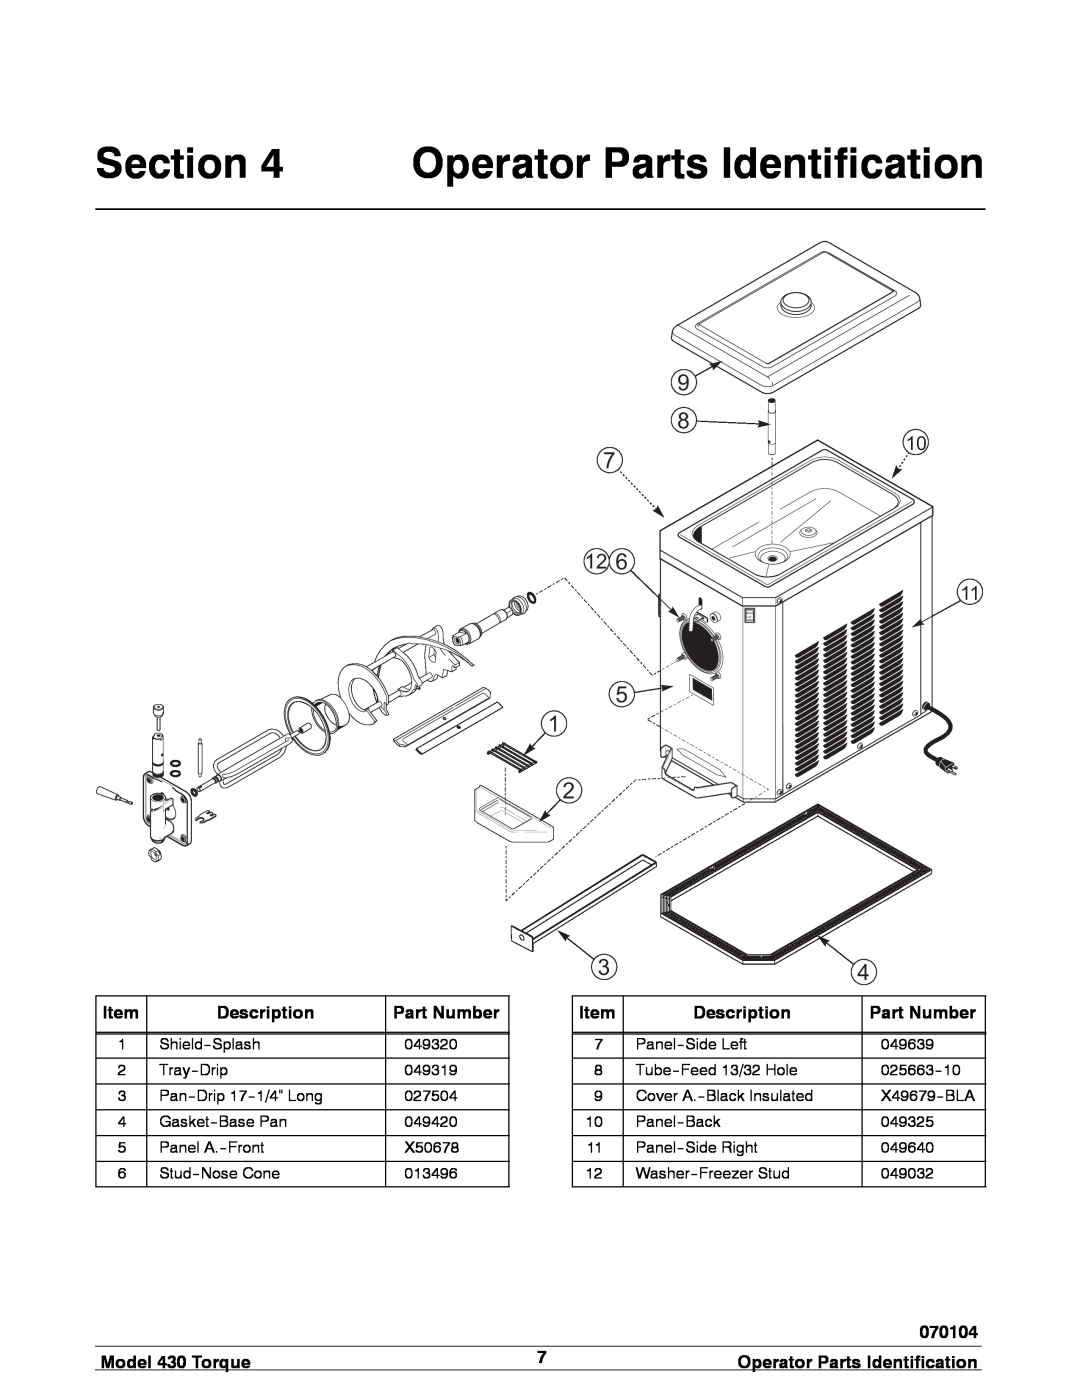 Taylor 430 TORQUE manual Operator Parts Identification, Description, Part Number, 070104, Model 430 Torque 